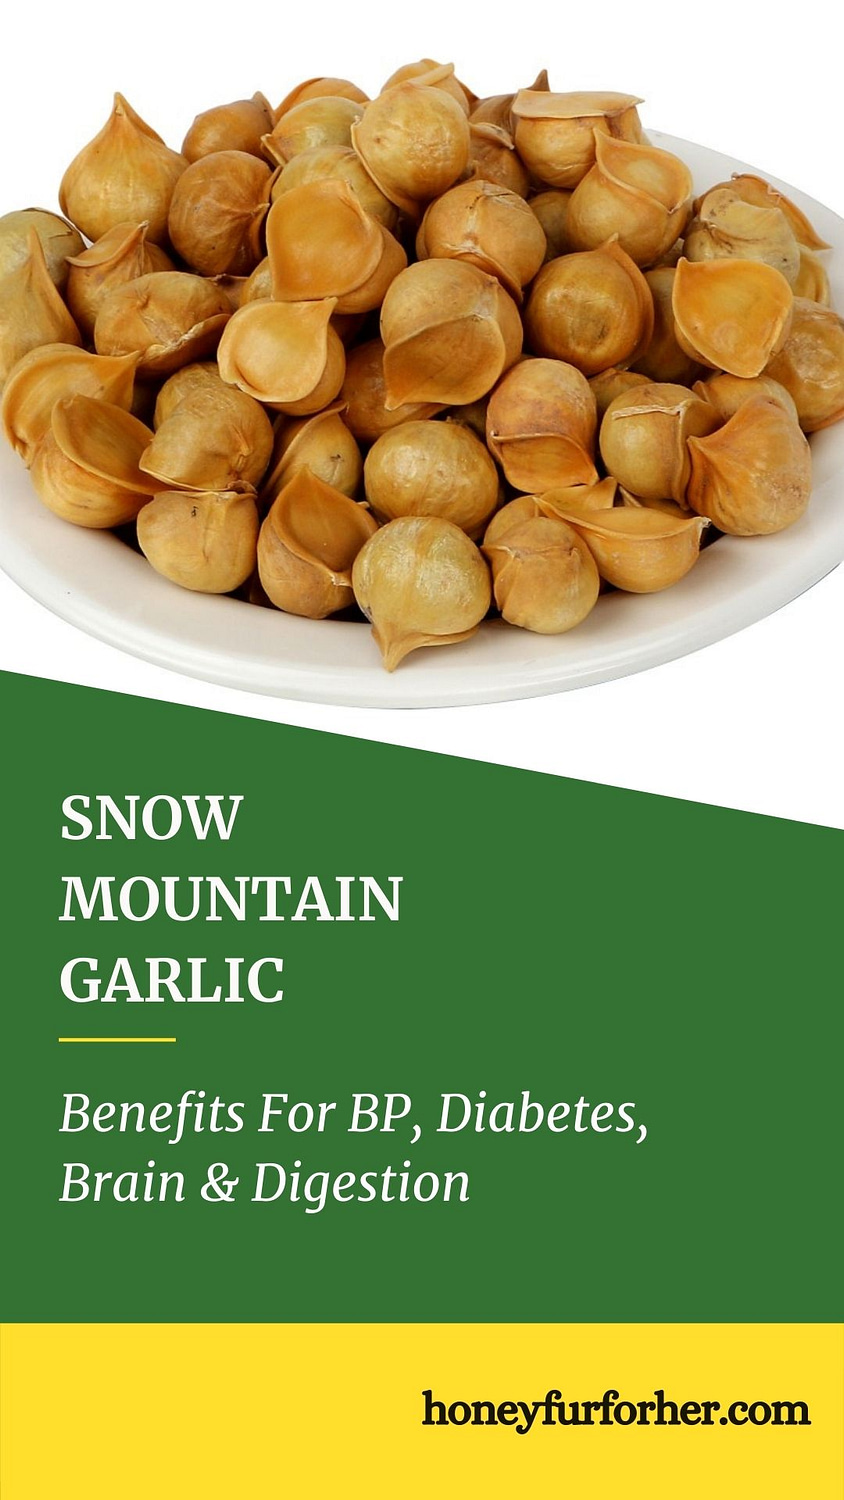 Snow Mountain Garlic Benefits Pinterest Pin 2